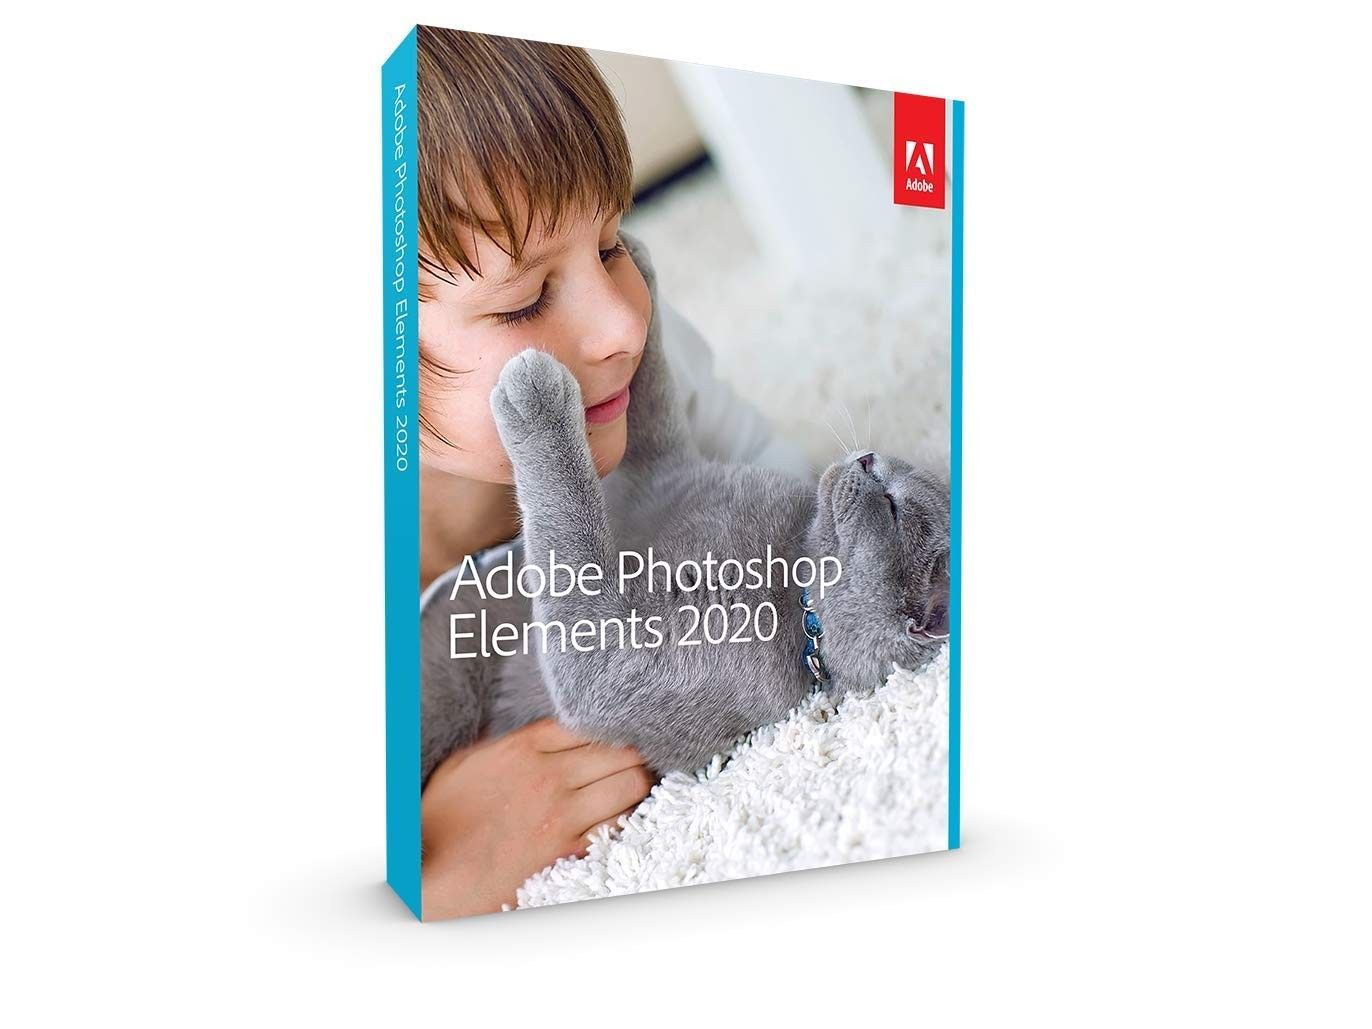 adobe photoshop elements 2020 download